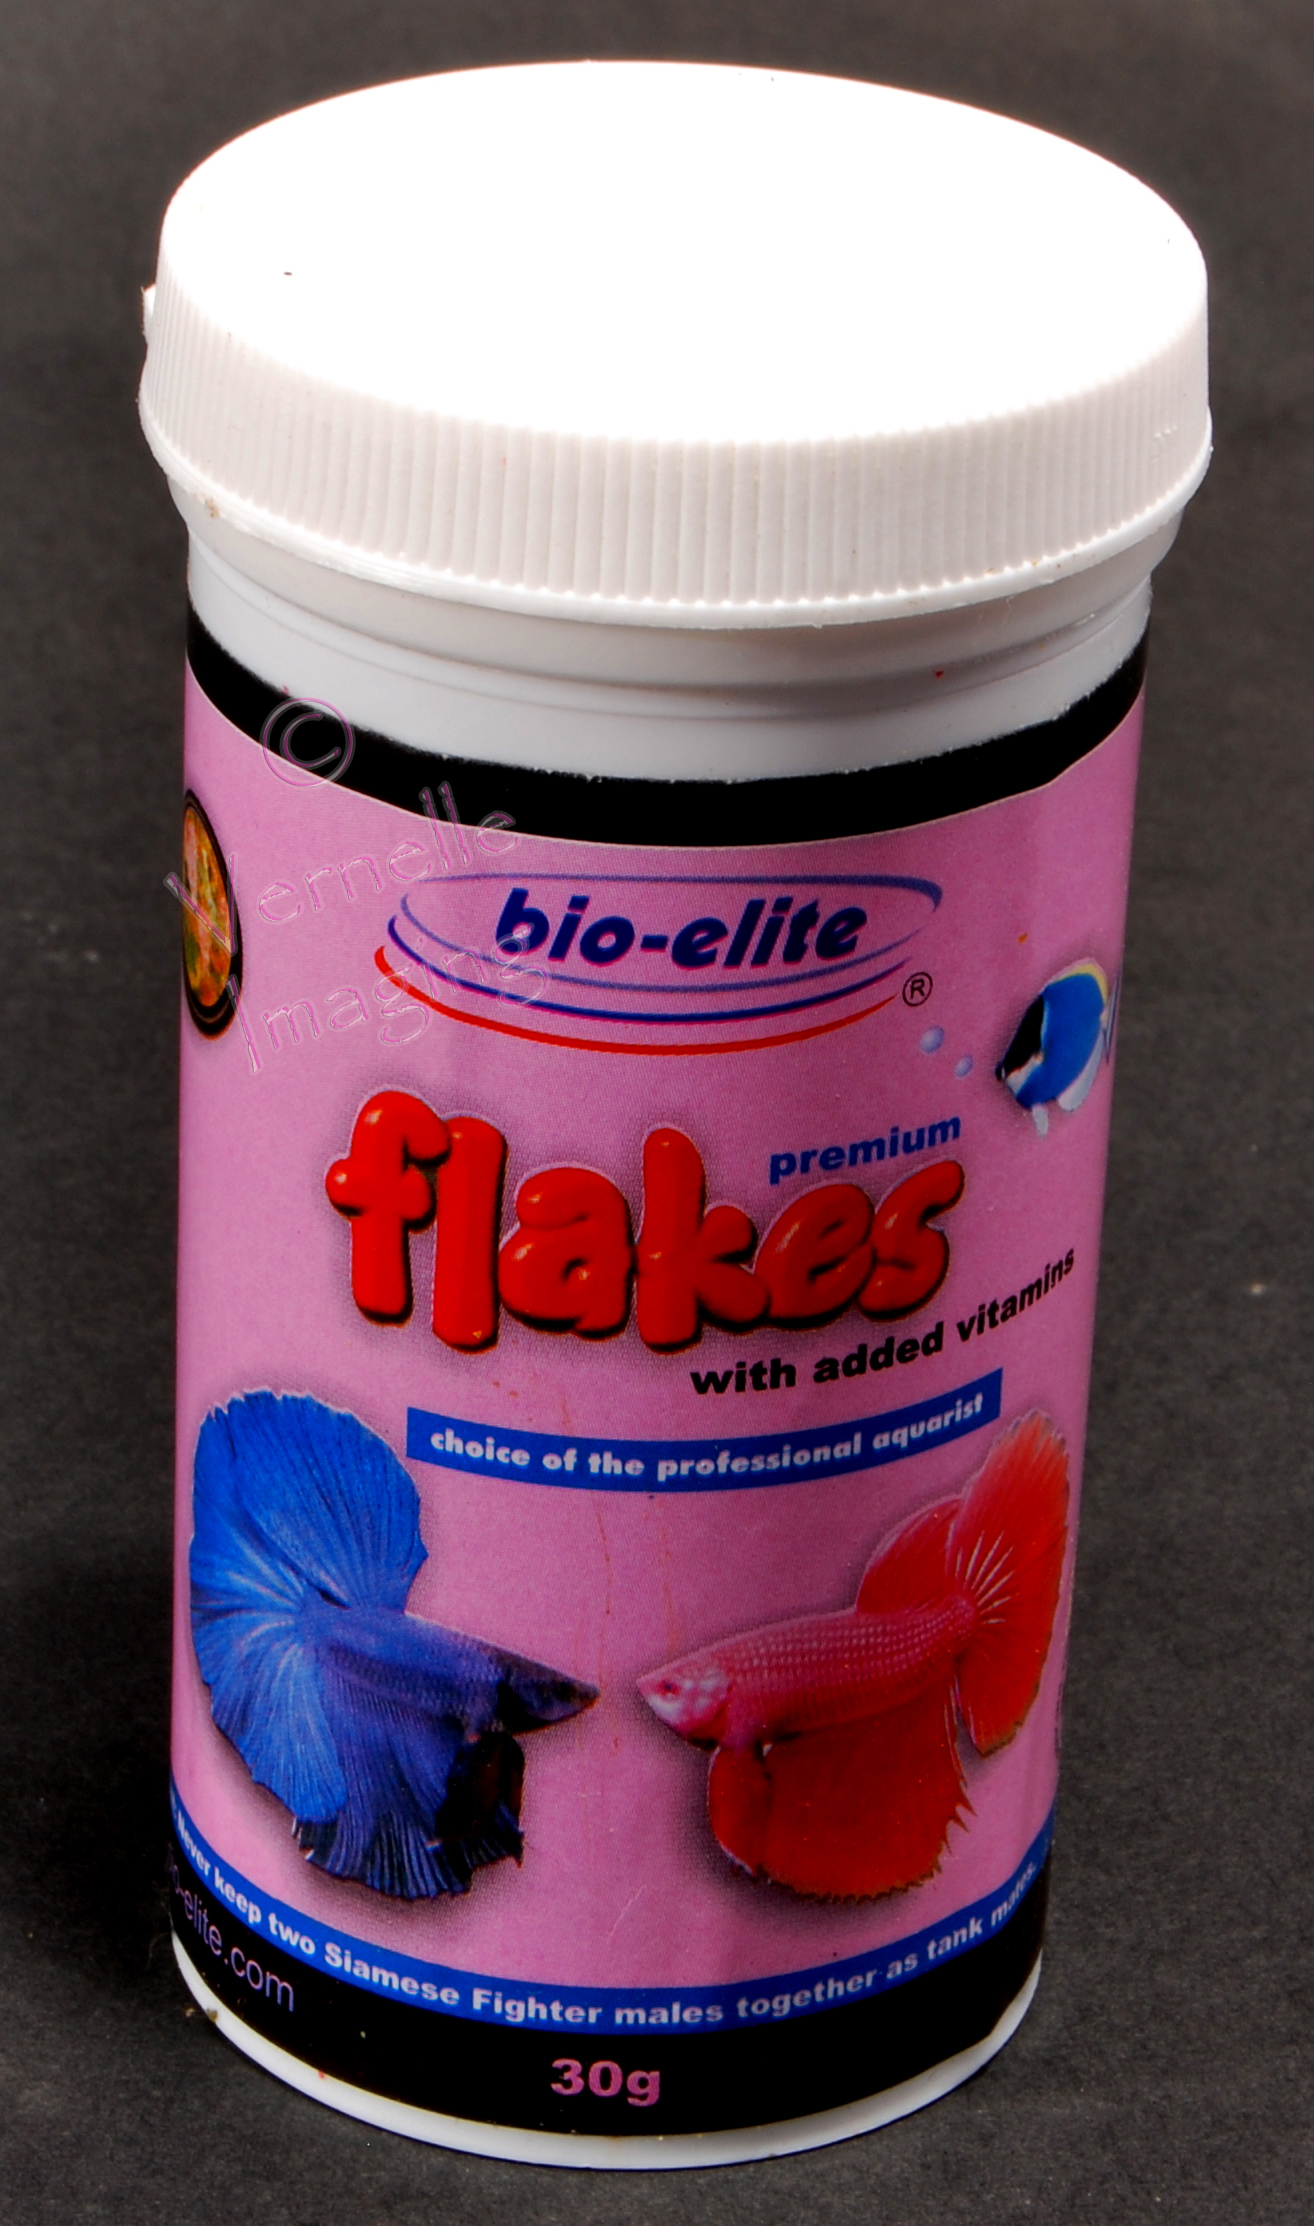 Bio Elite fish flakes